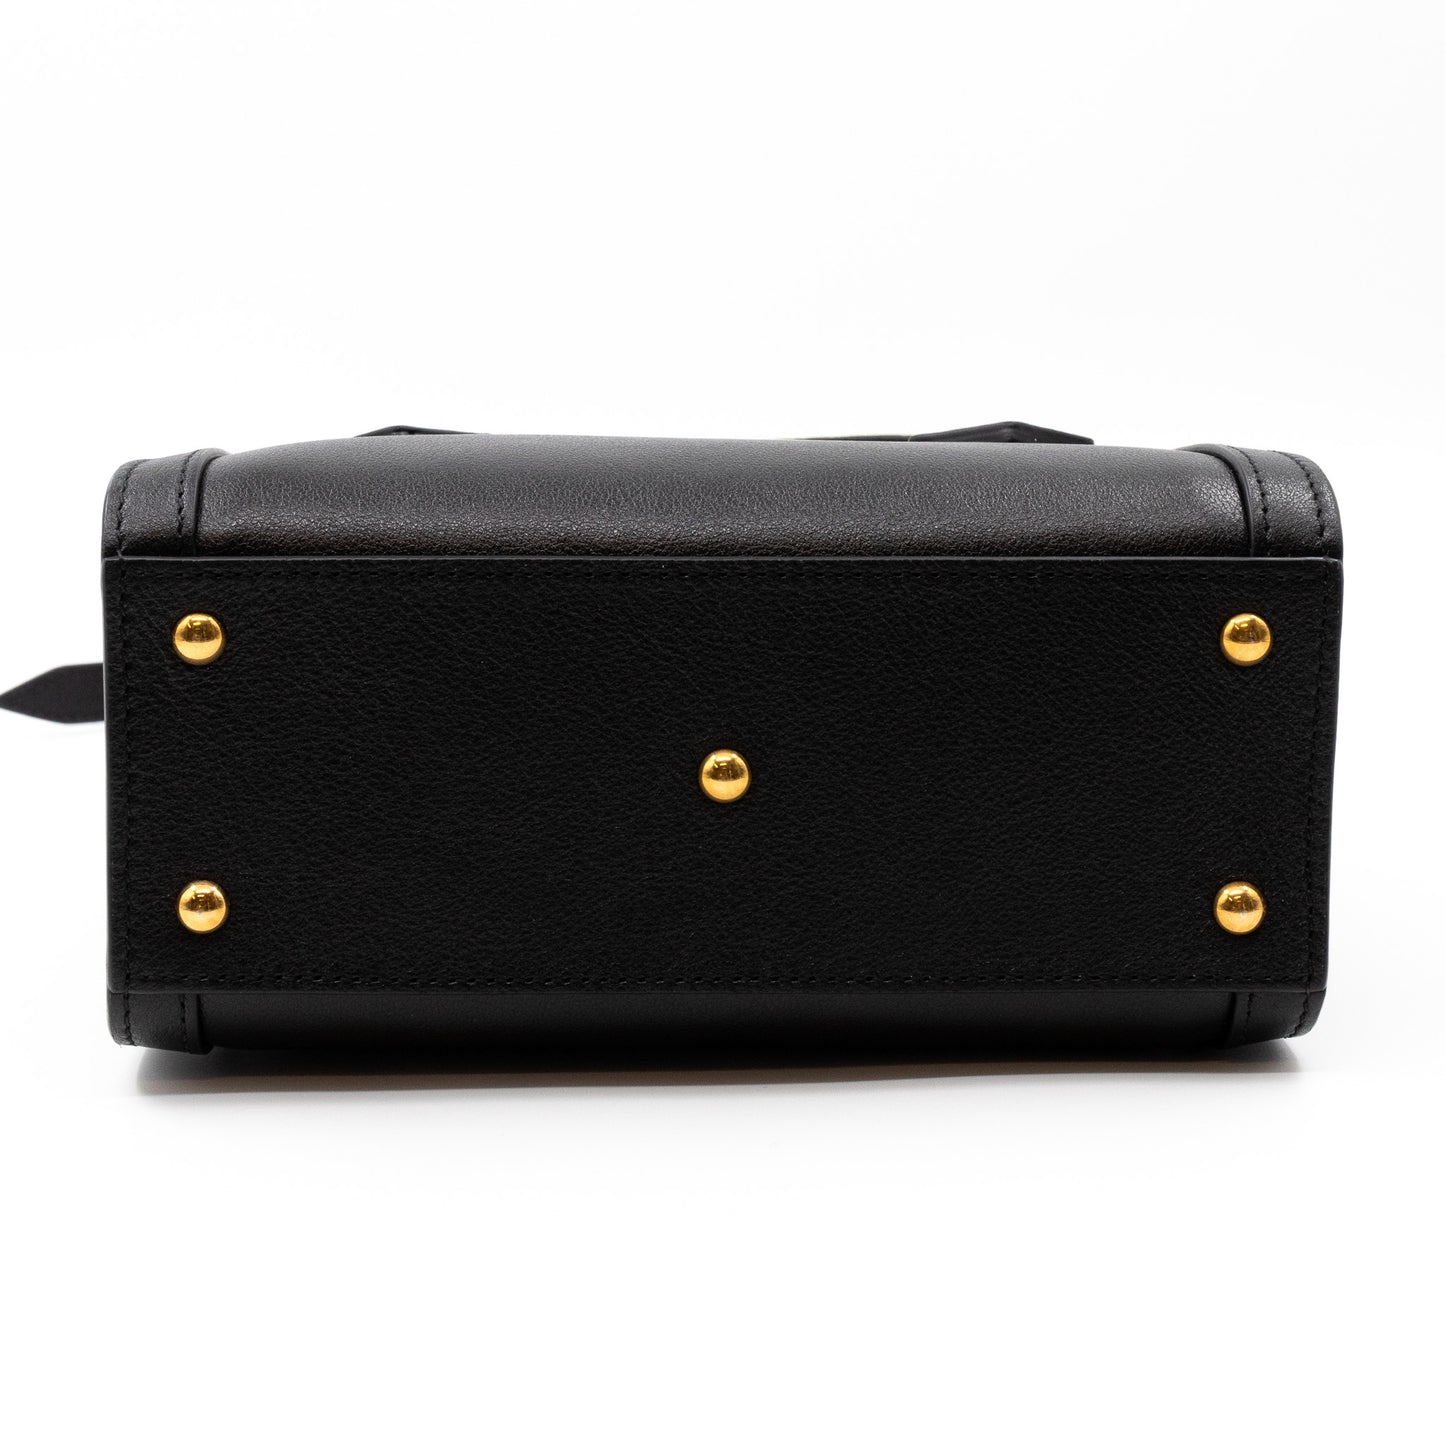 Diana Mini Tote Bag Black Leather